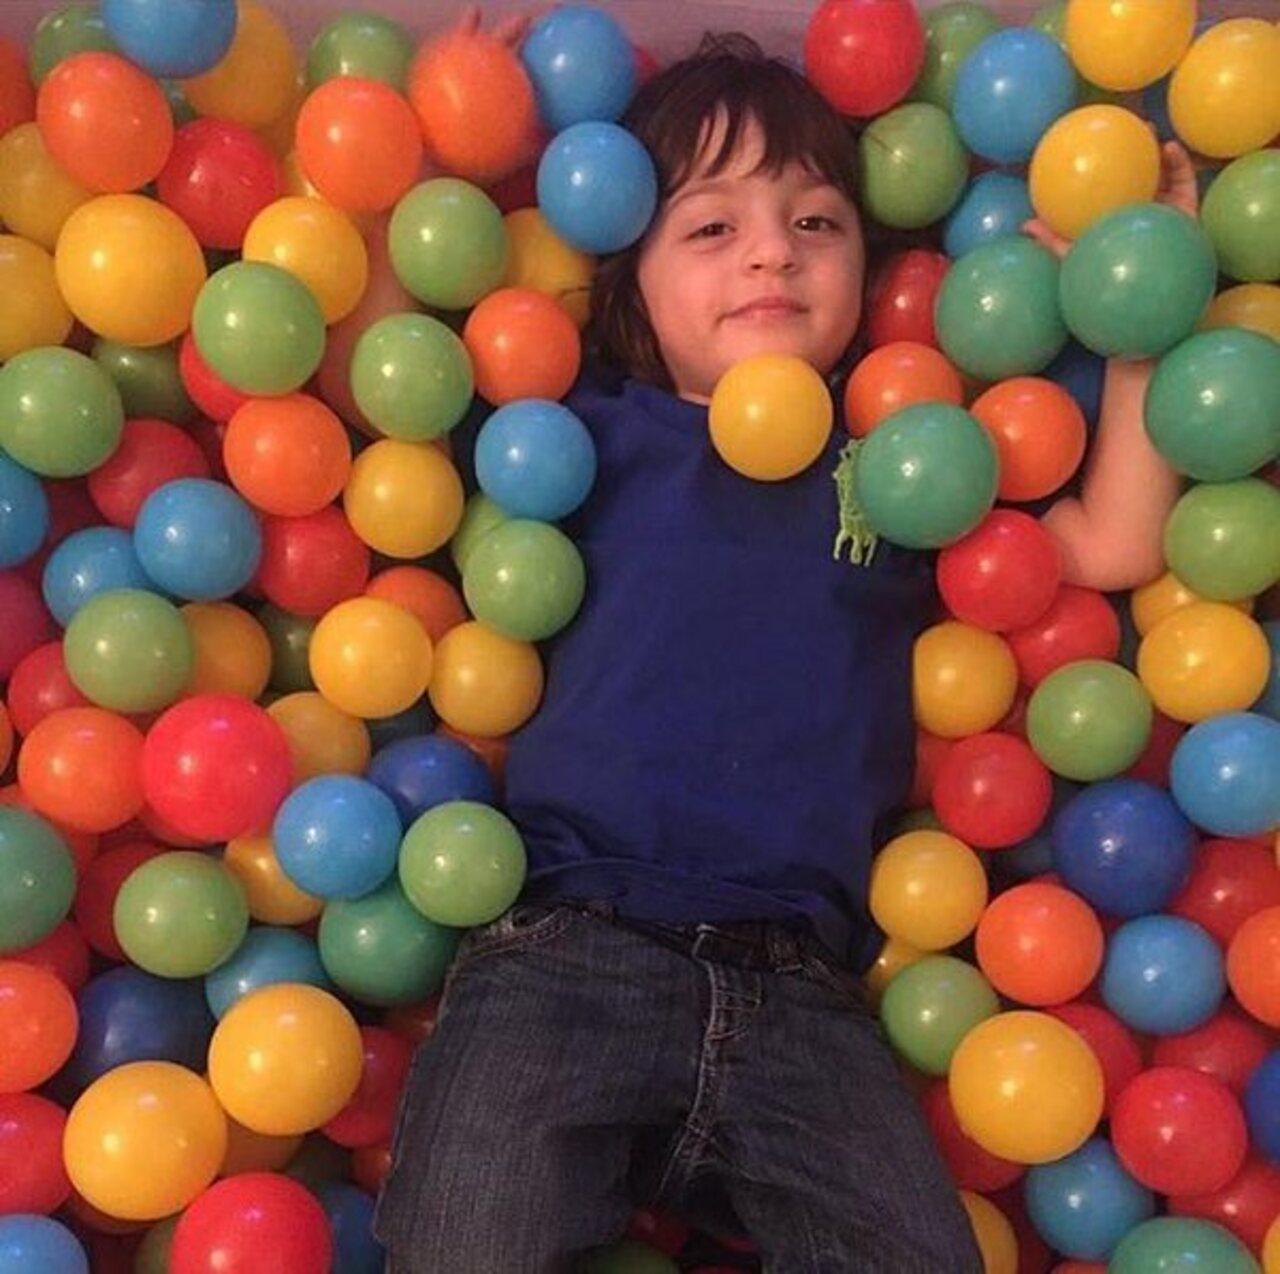 Shah Rukh Khan and Gauri Khan's son AbRam was born on May 27, 2013